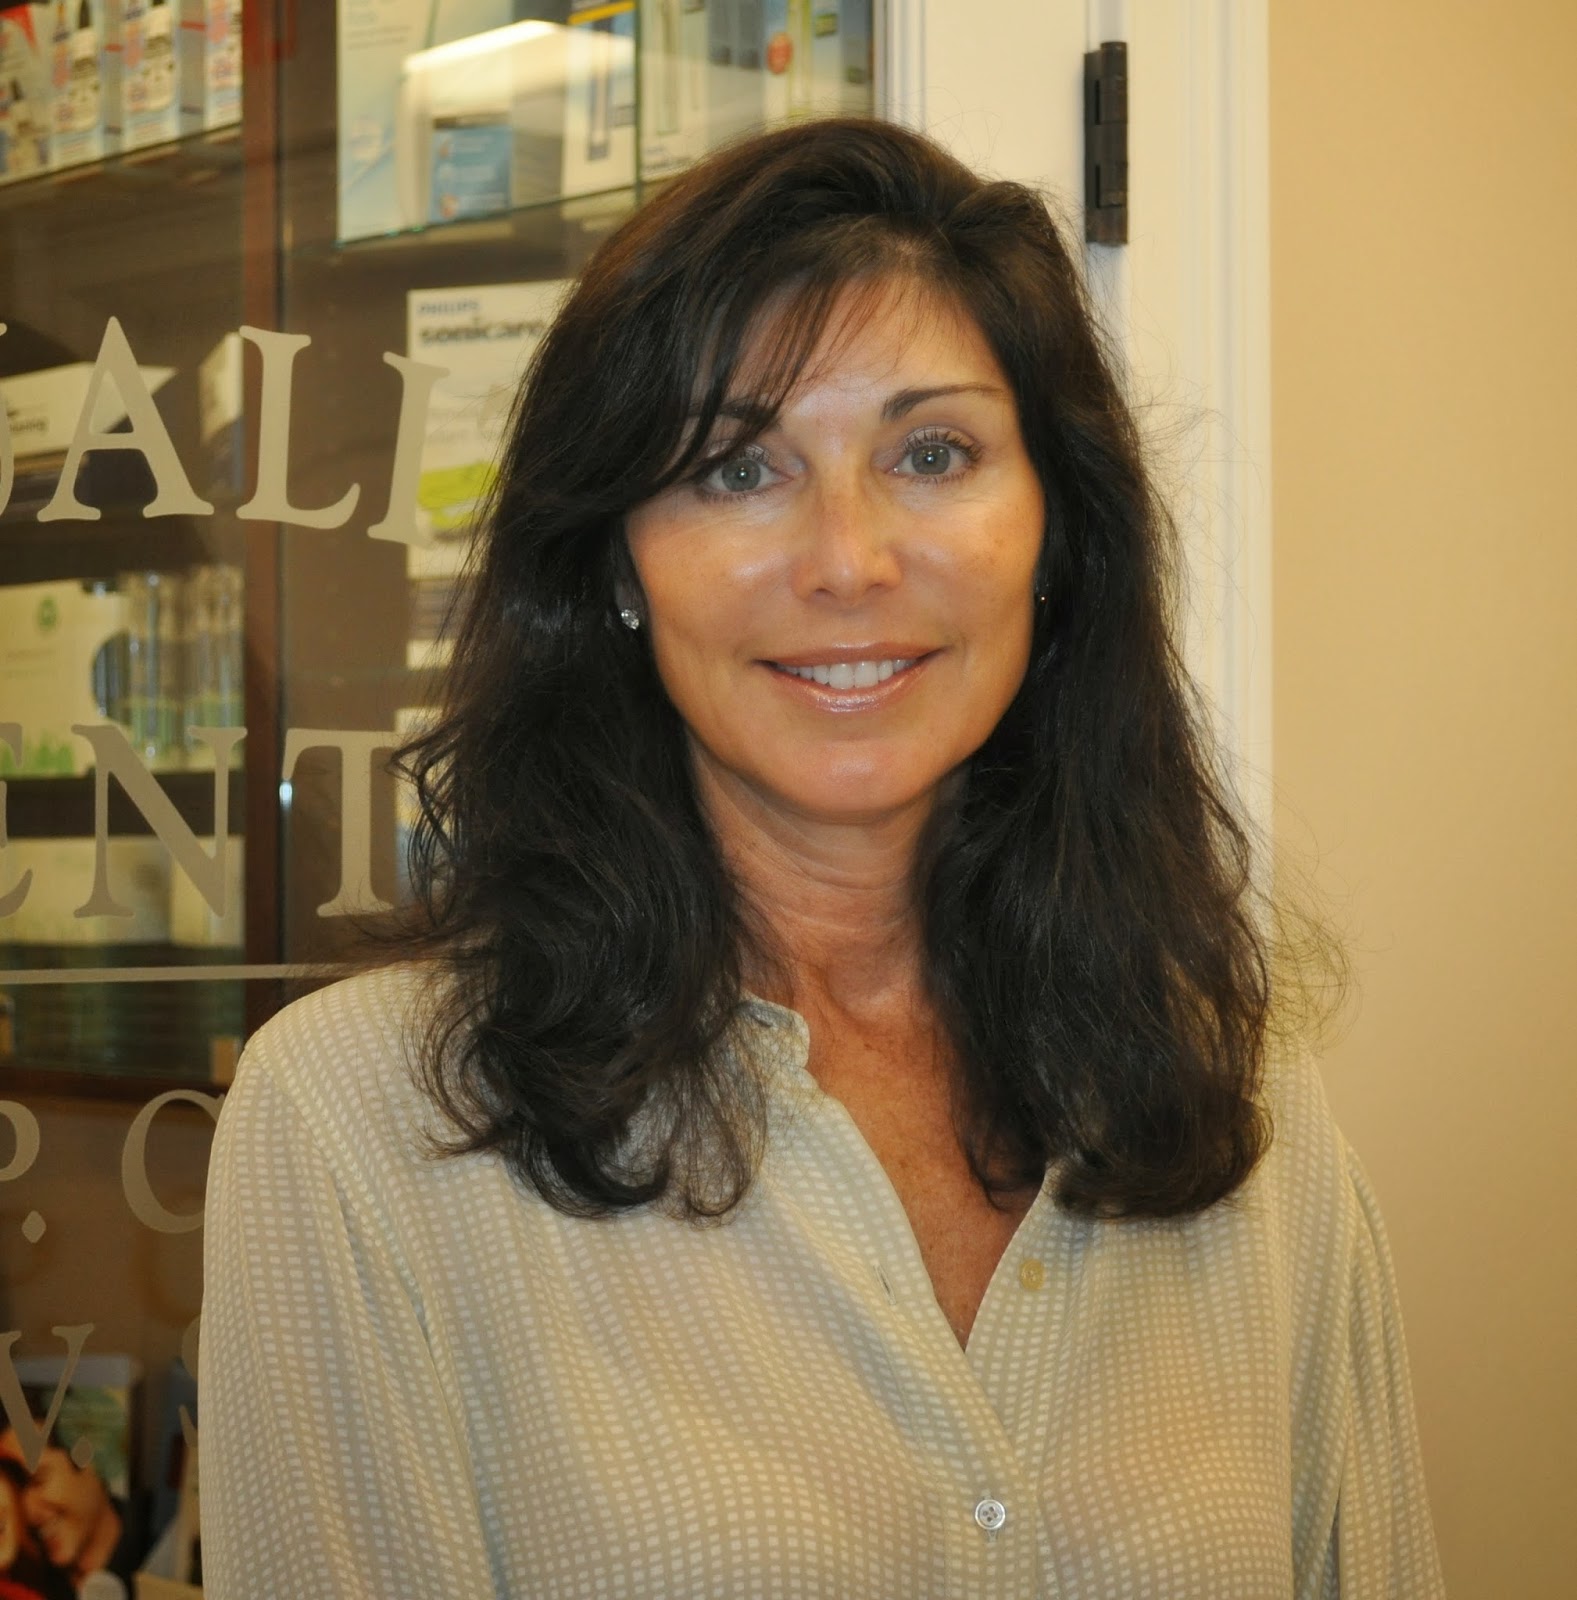 Photo of Pamela Casperino, DMD in Totowa City, New Jersey, United States - 1 Picture of Point of interest, Establishment, Health, Dentist